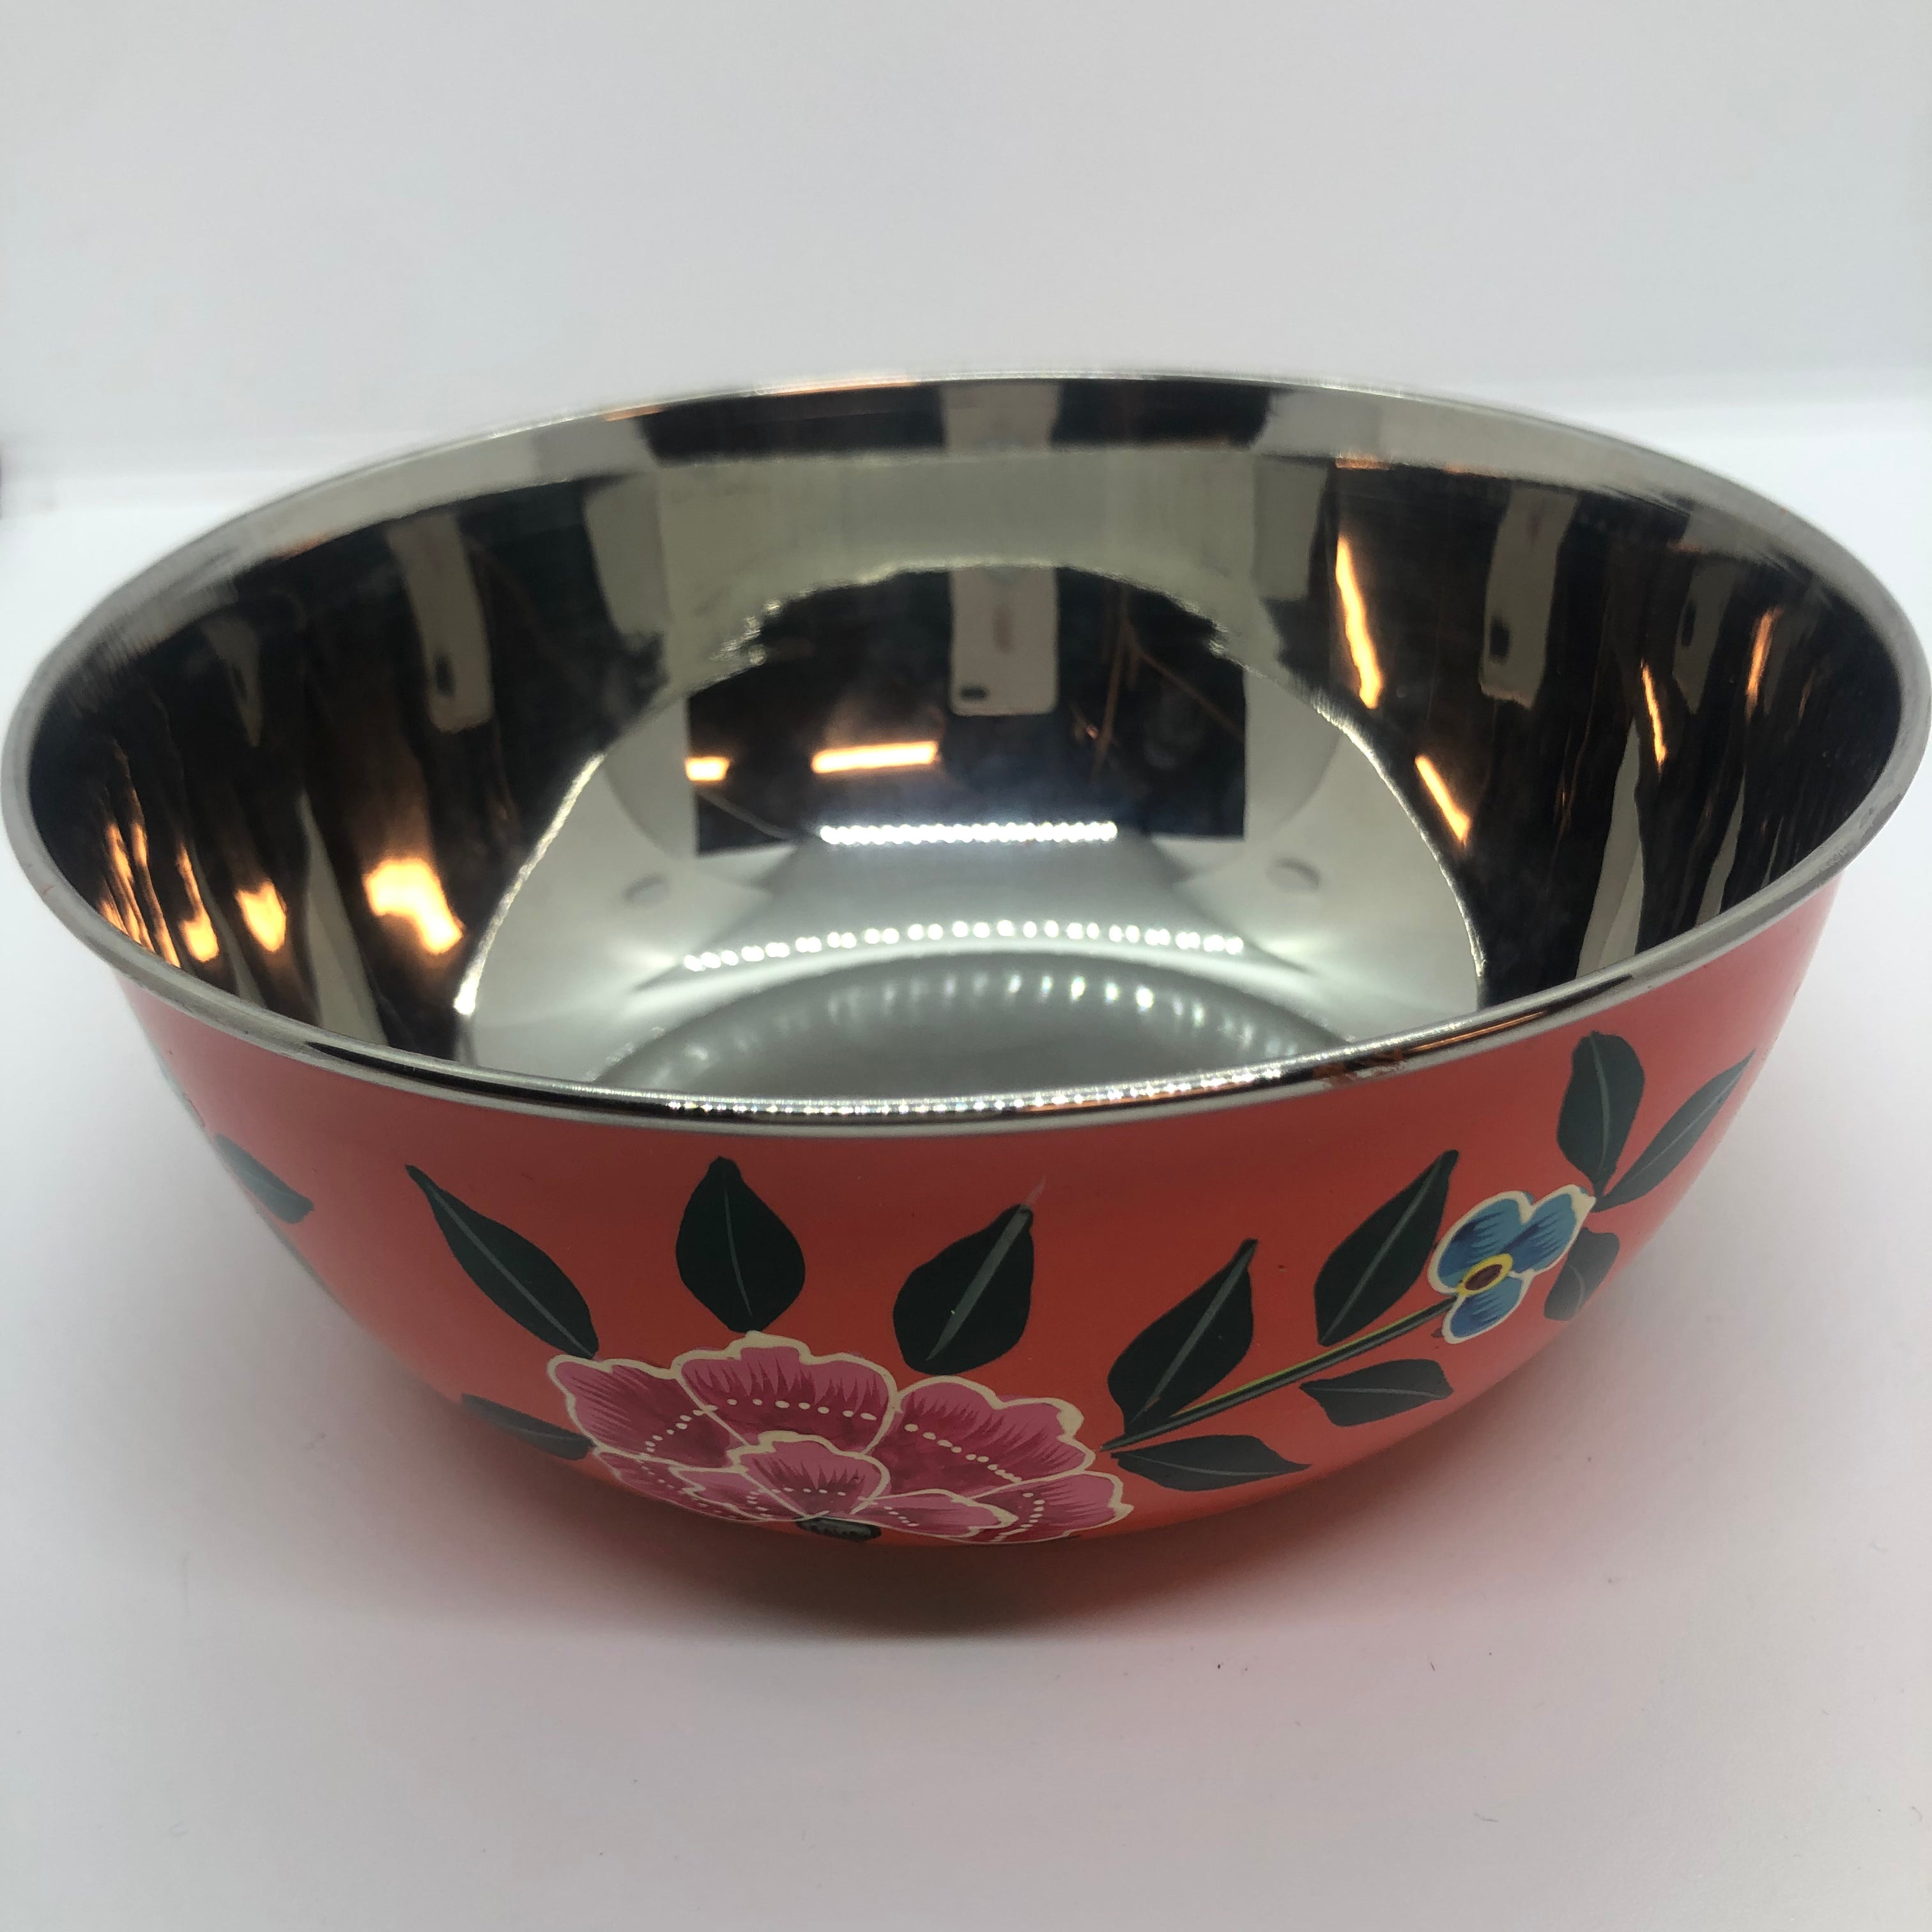 Bowl liten - Metall skål